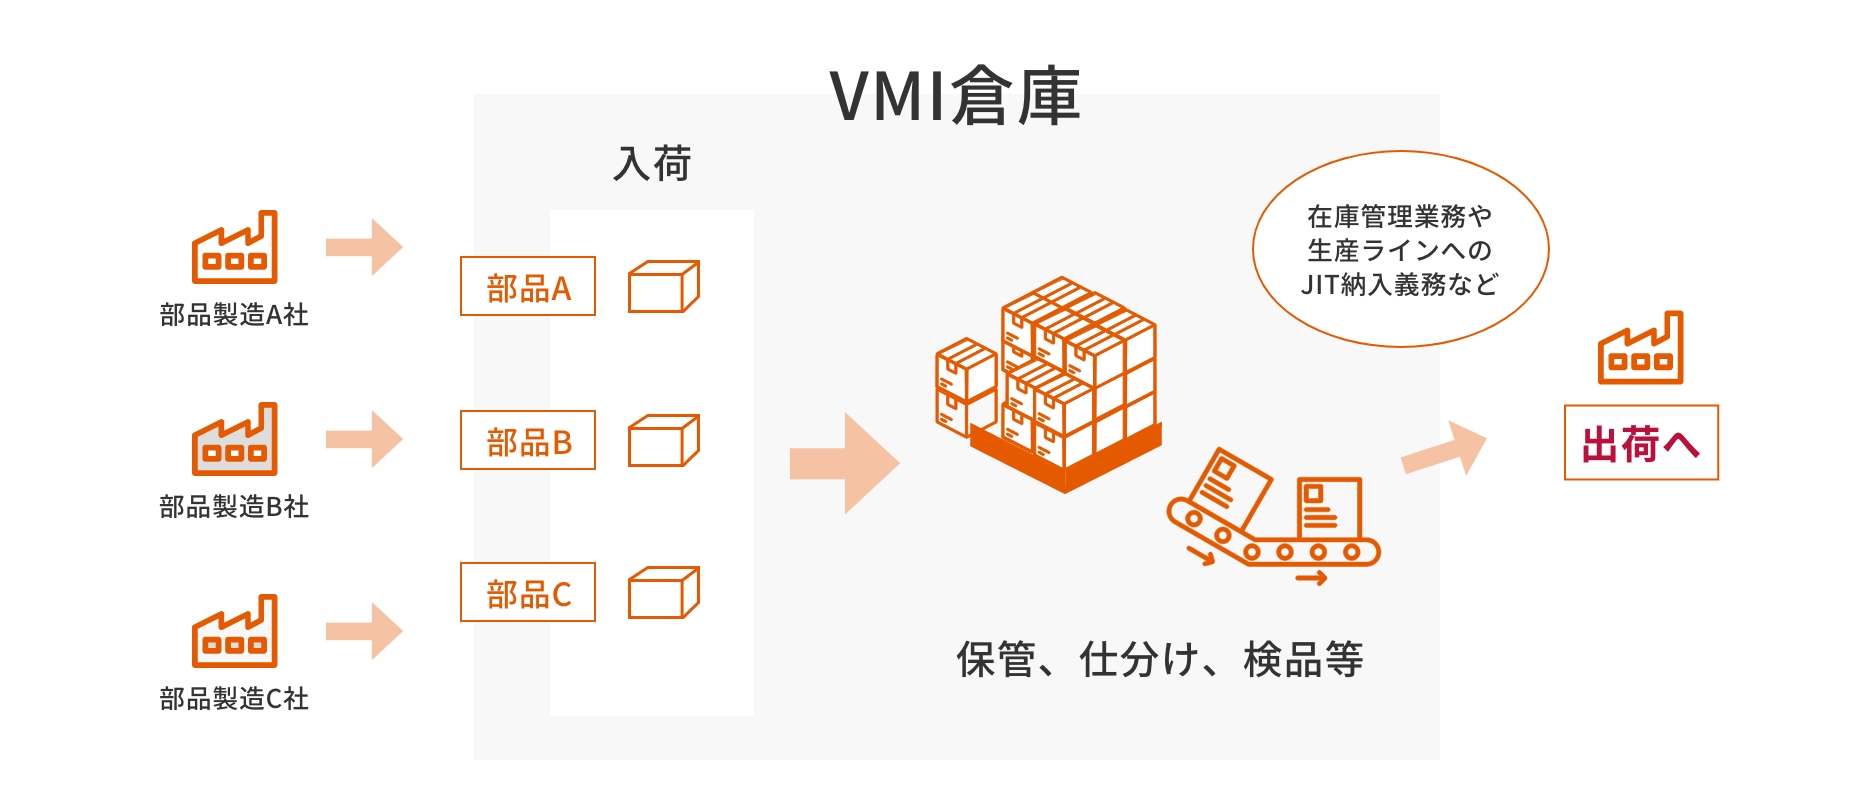 VMI（Vendor Managed inventory）概念図